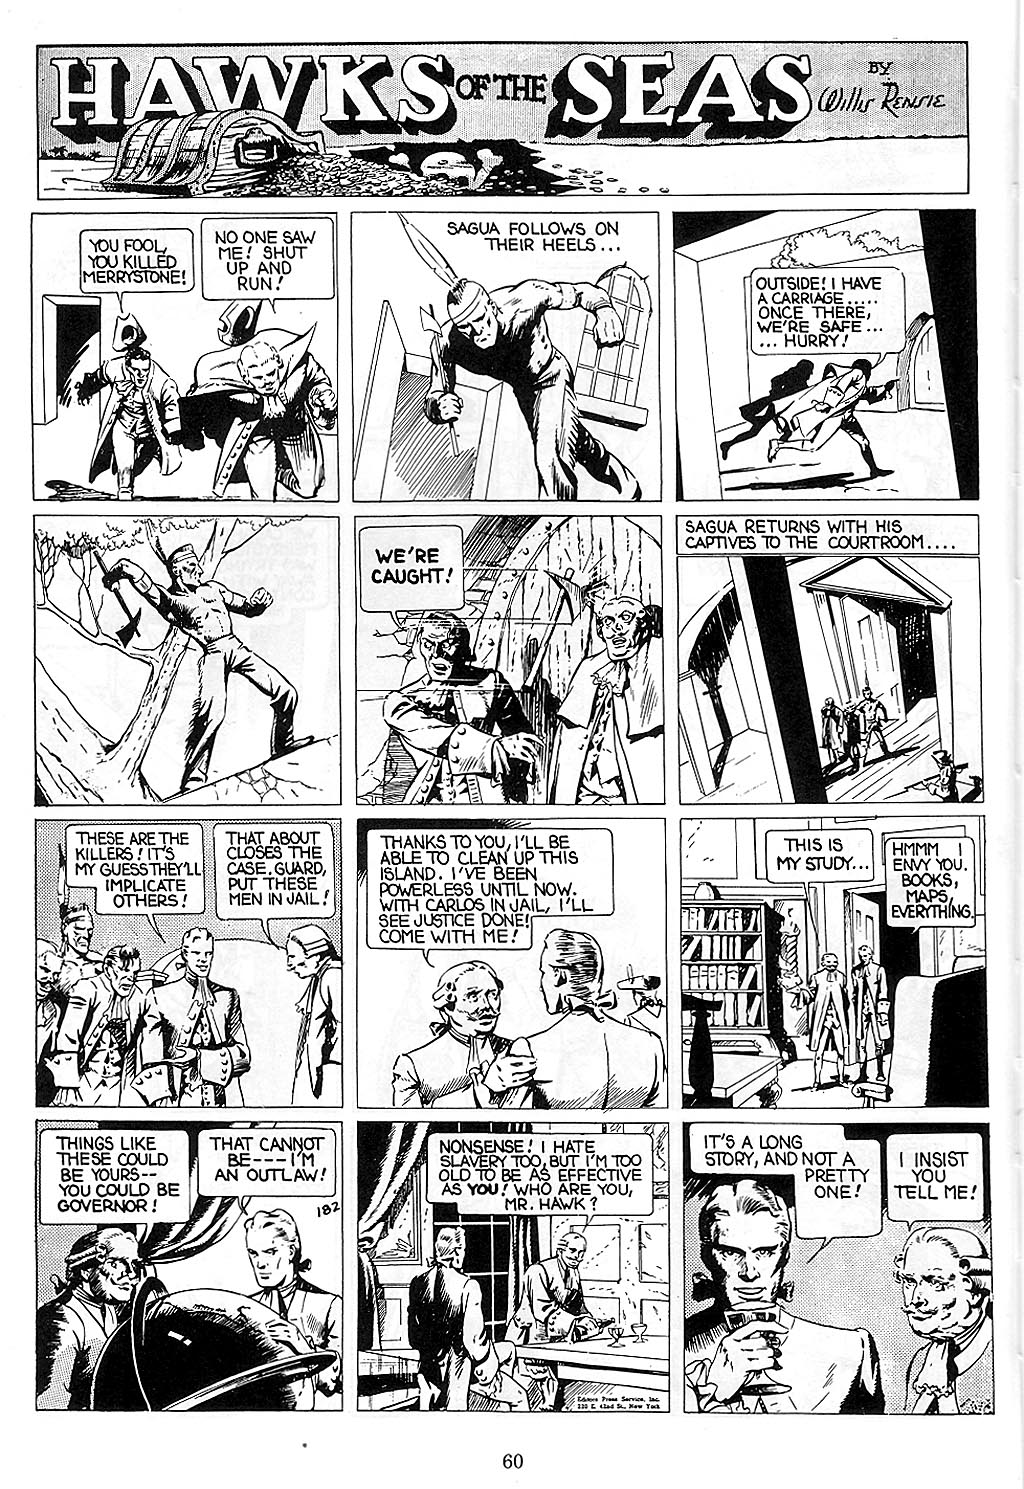 Read online Will Eisner's Hawks of the Seas comic -  Issue # TPB - 61